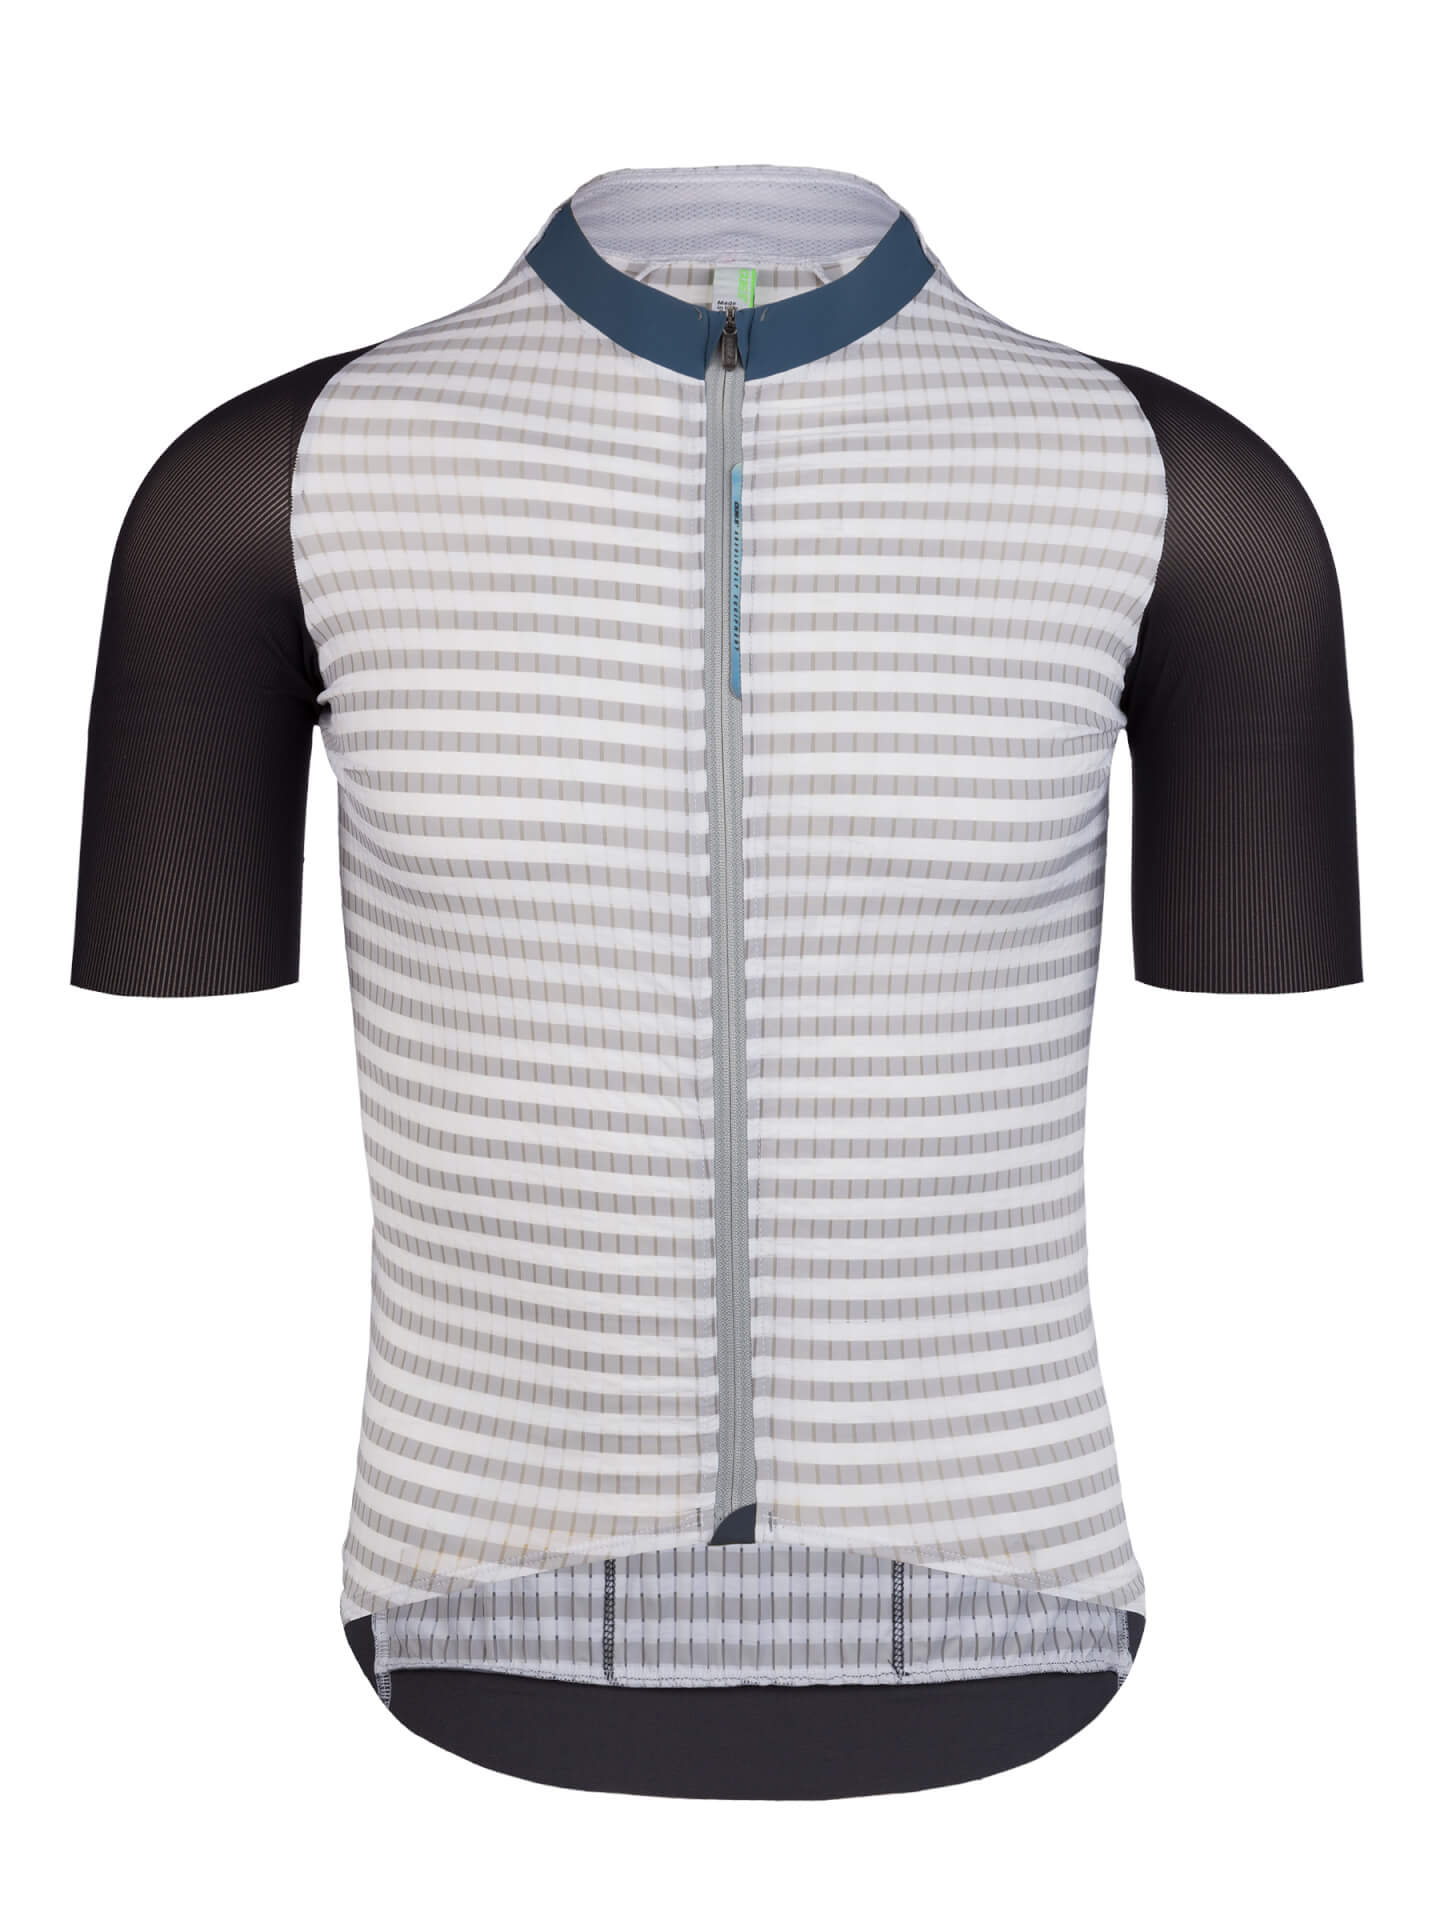 Q36.5 Jersey short sleeve Clima - Cycling jersey - Men's